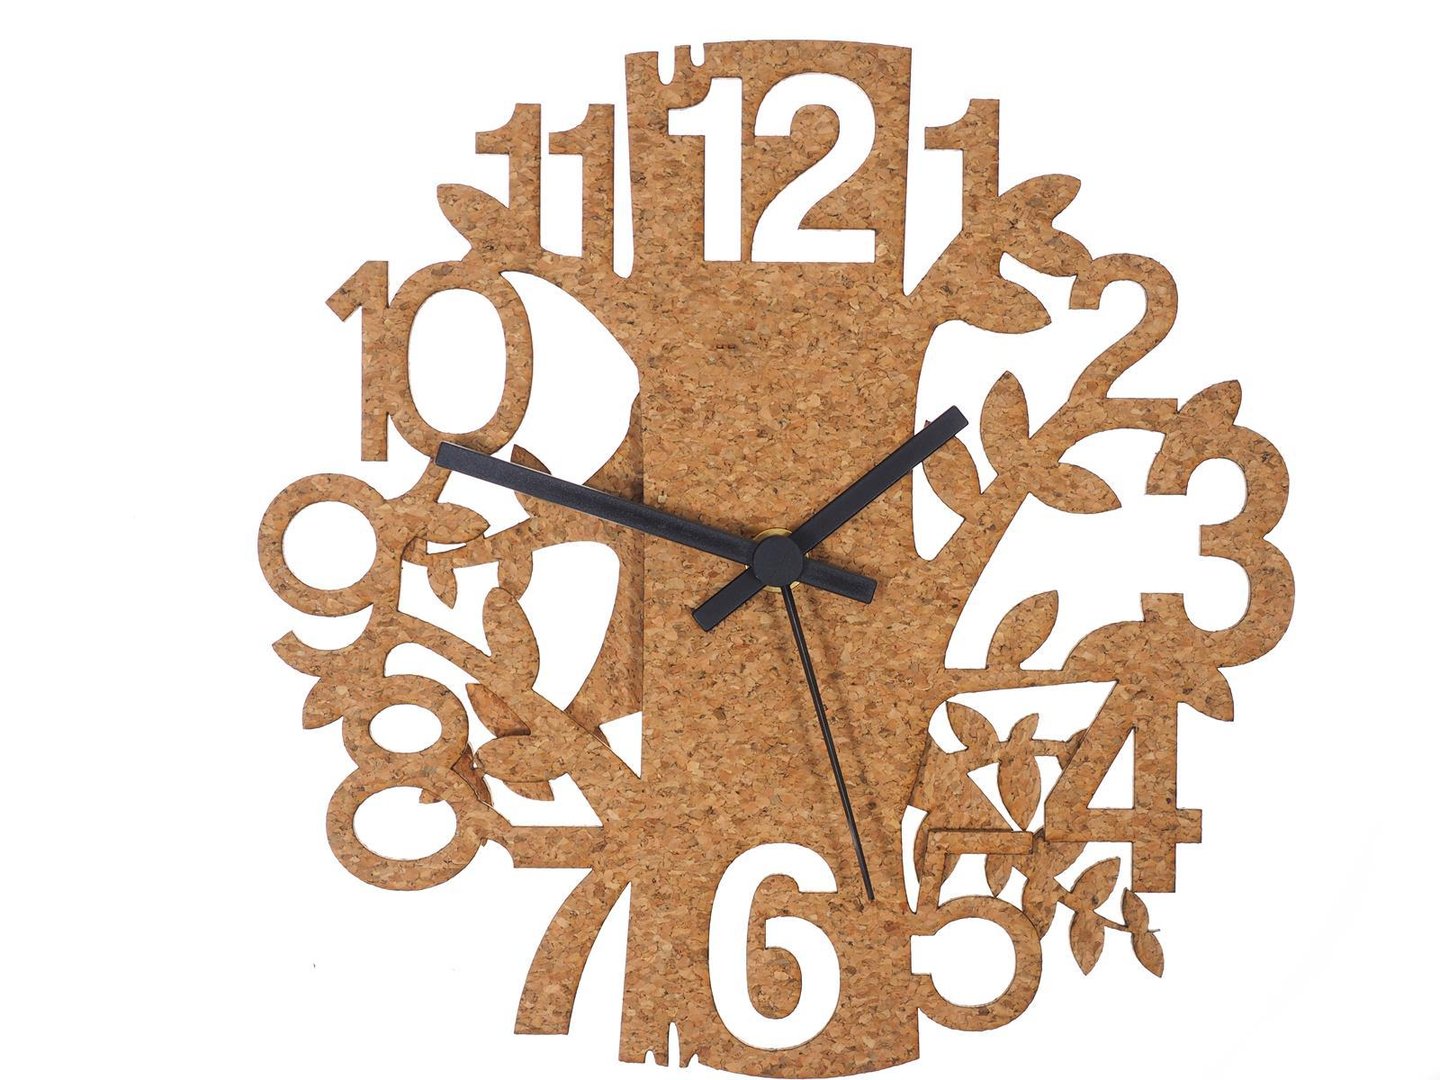 6510 Wall Clock From Cork Tree